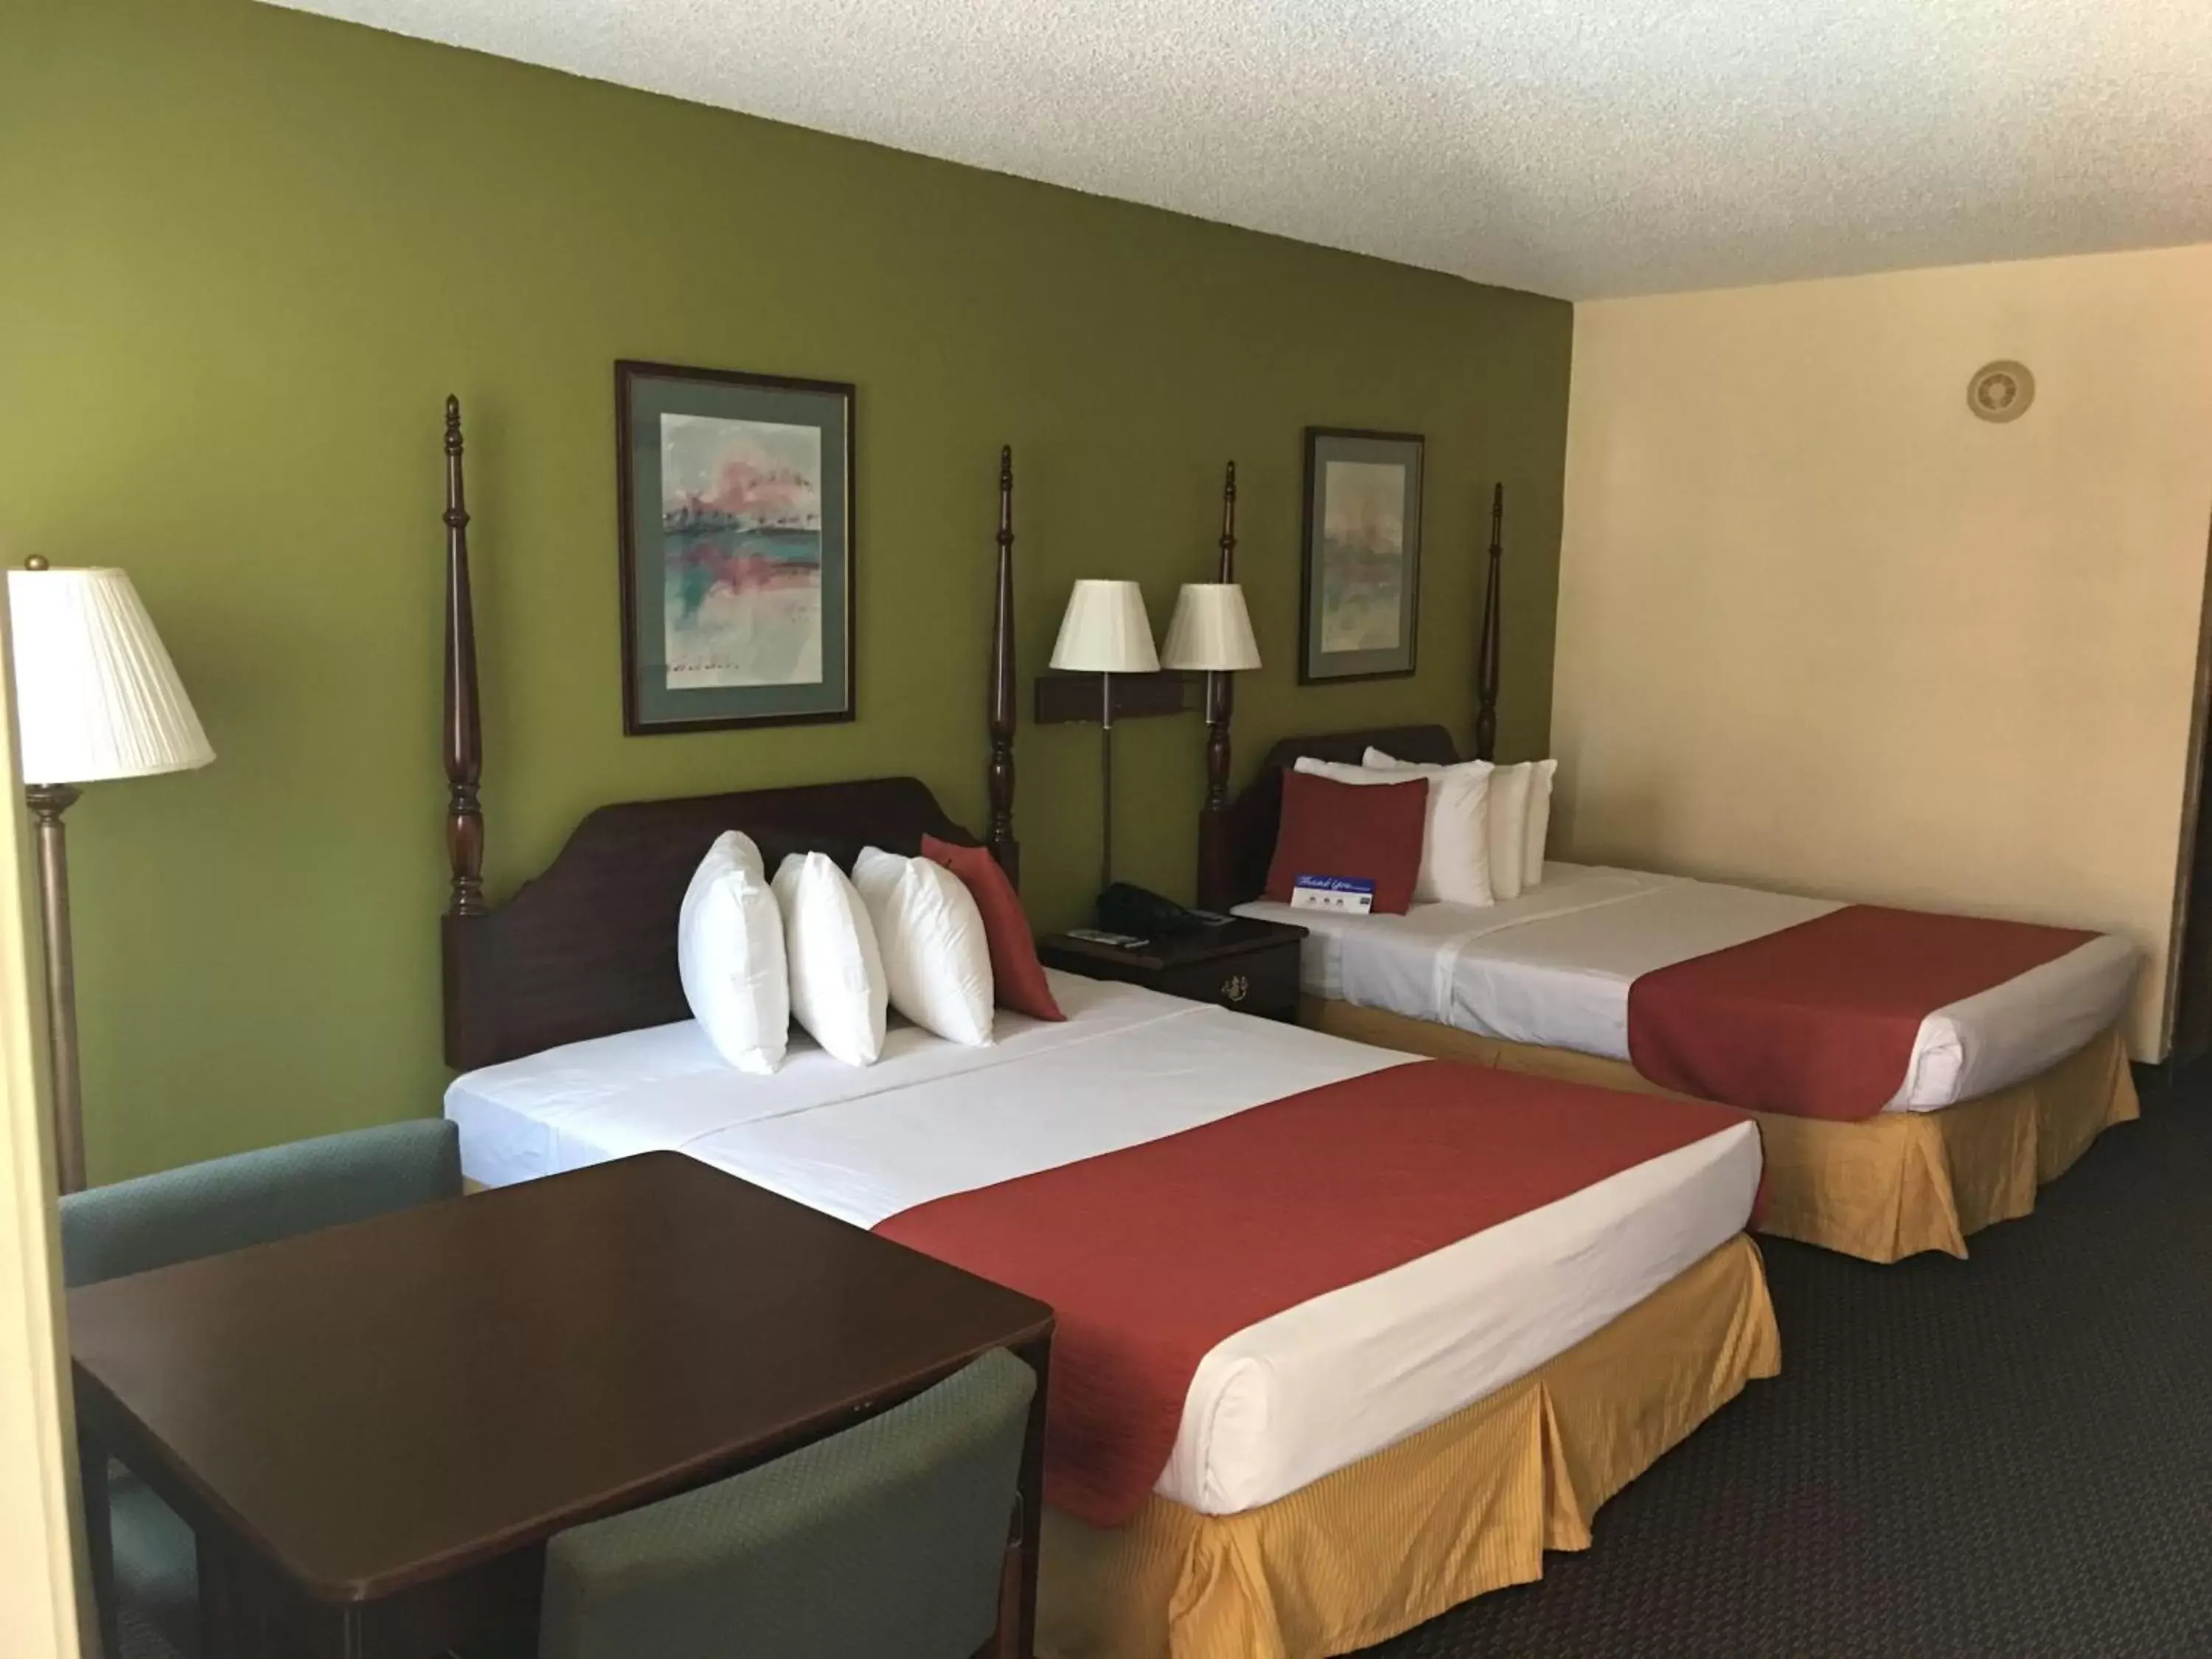 Bedroom, Room Photo in Americas Best Value Inn - Malvern